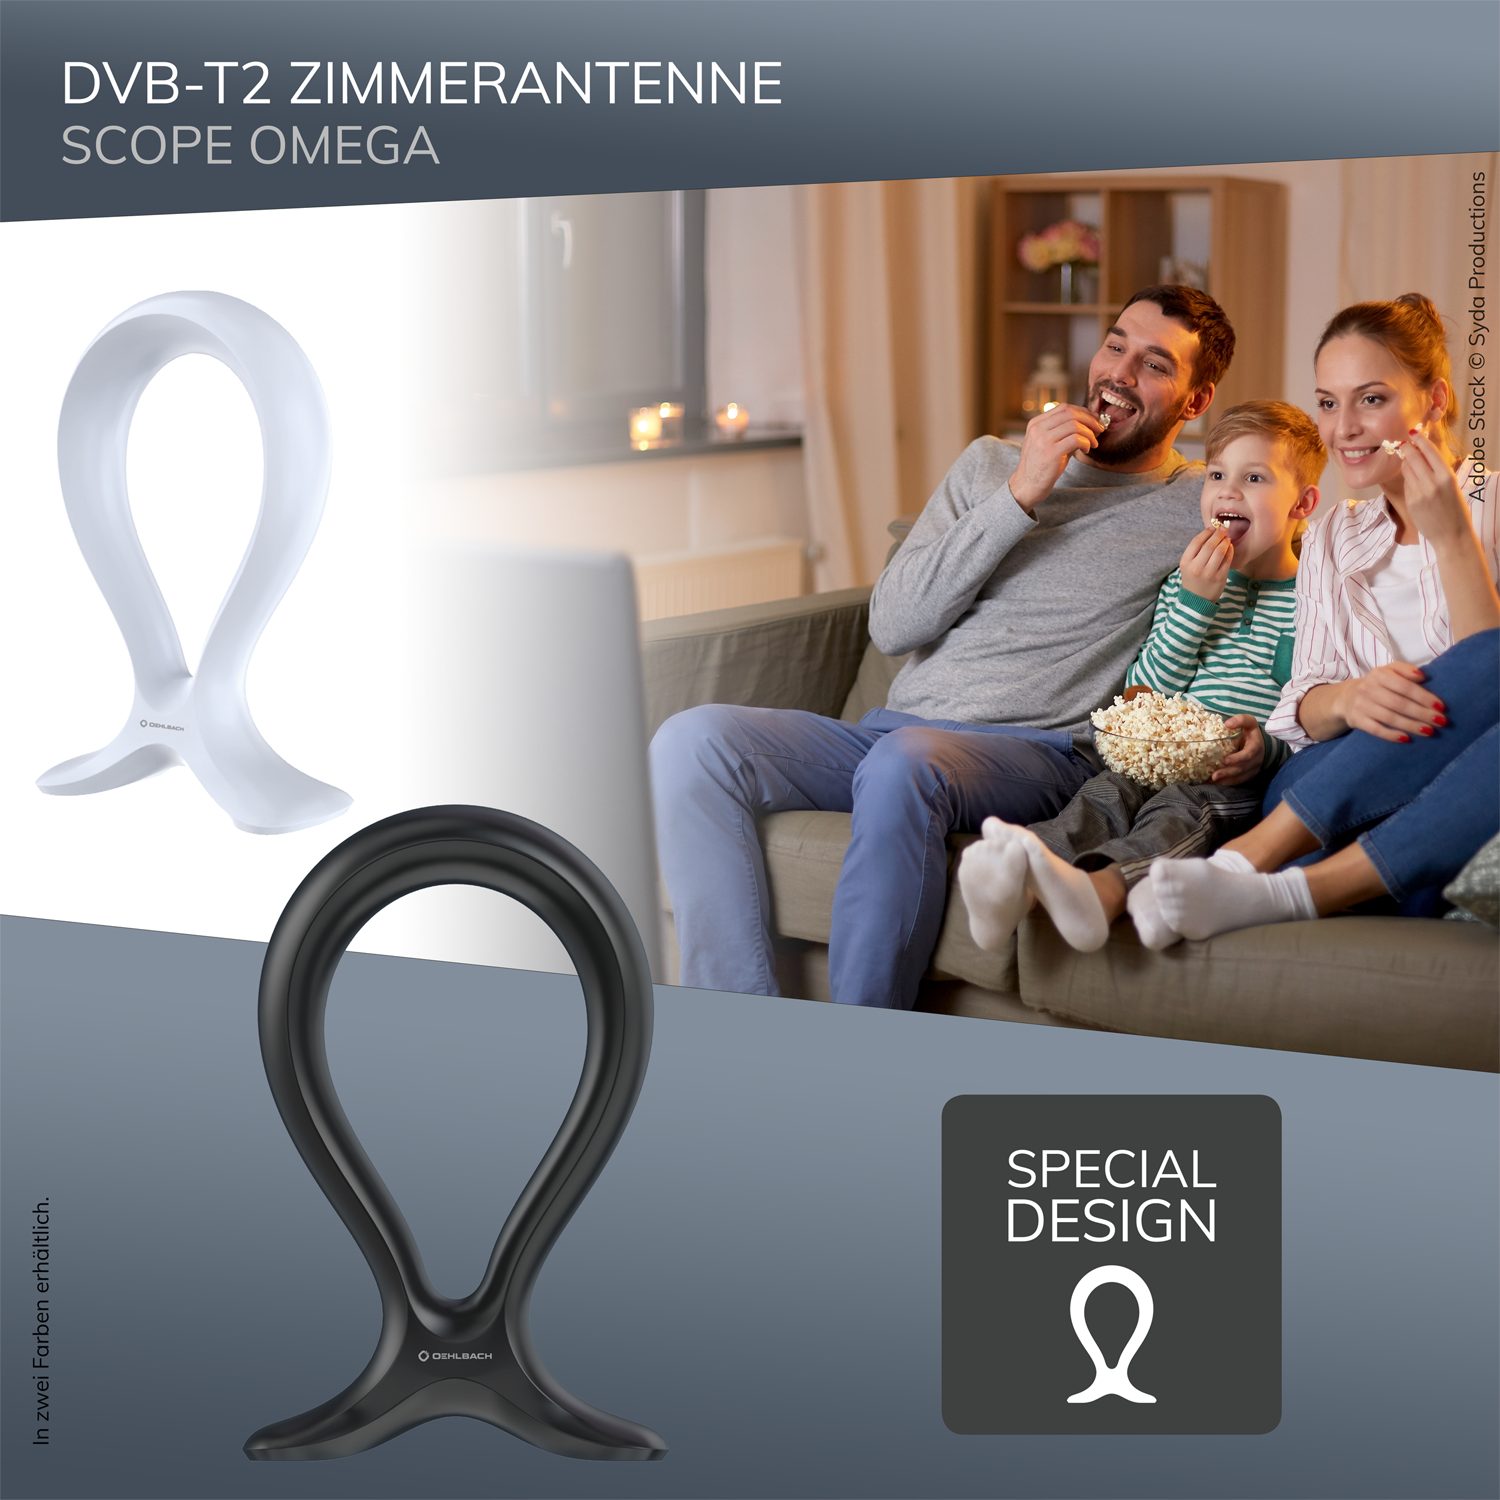 Oehlbach Scope Omega Zimmerantenne Innenantenne DVB-T2 Weiß (DVB-T2) für